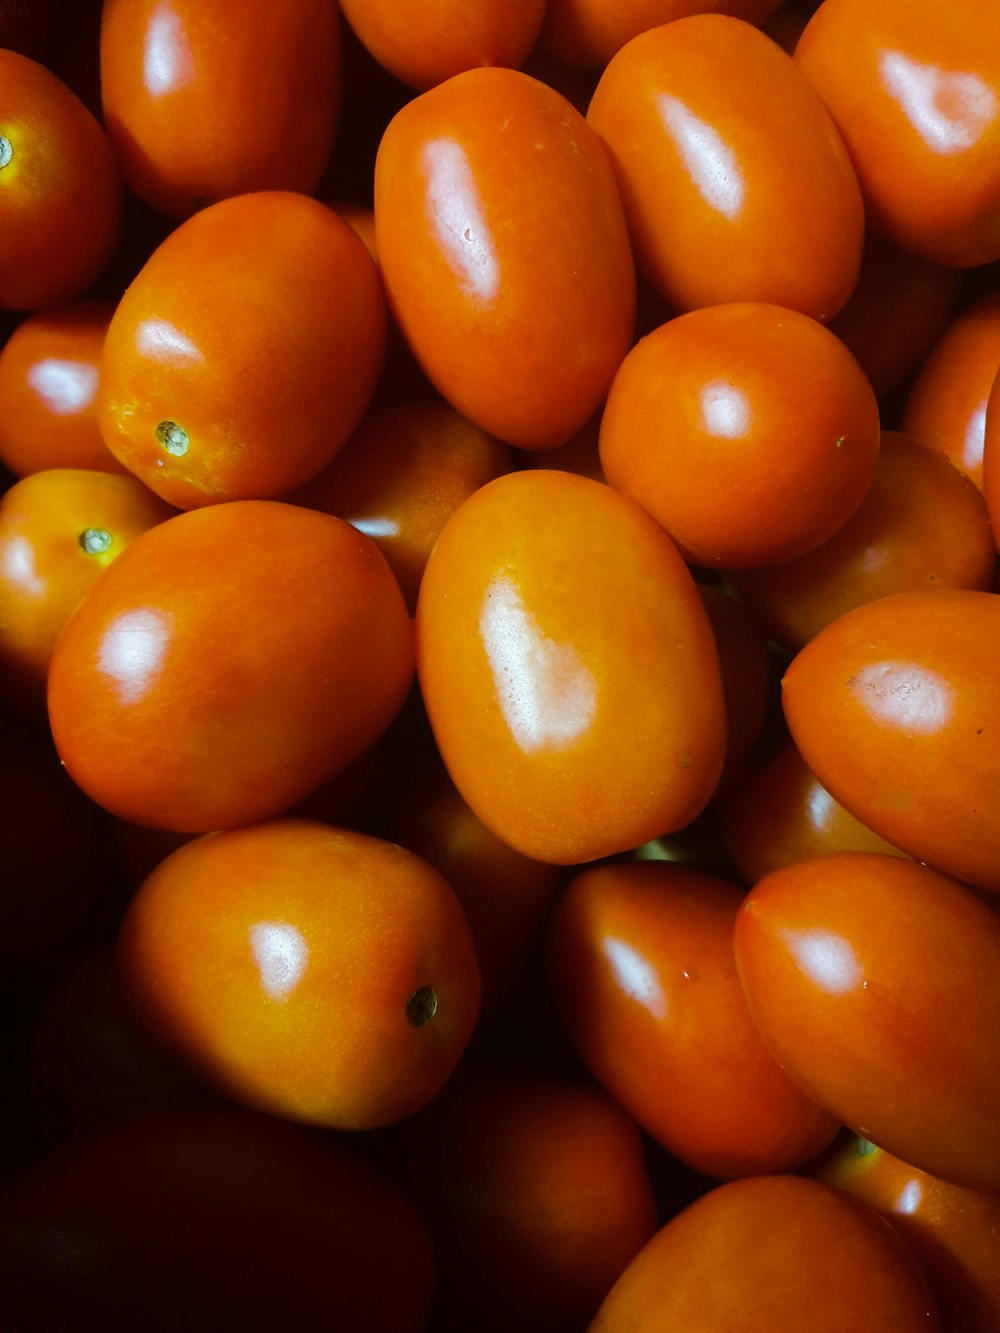 tomato fruits